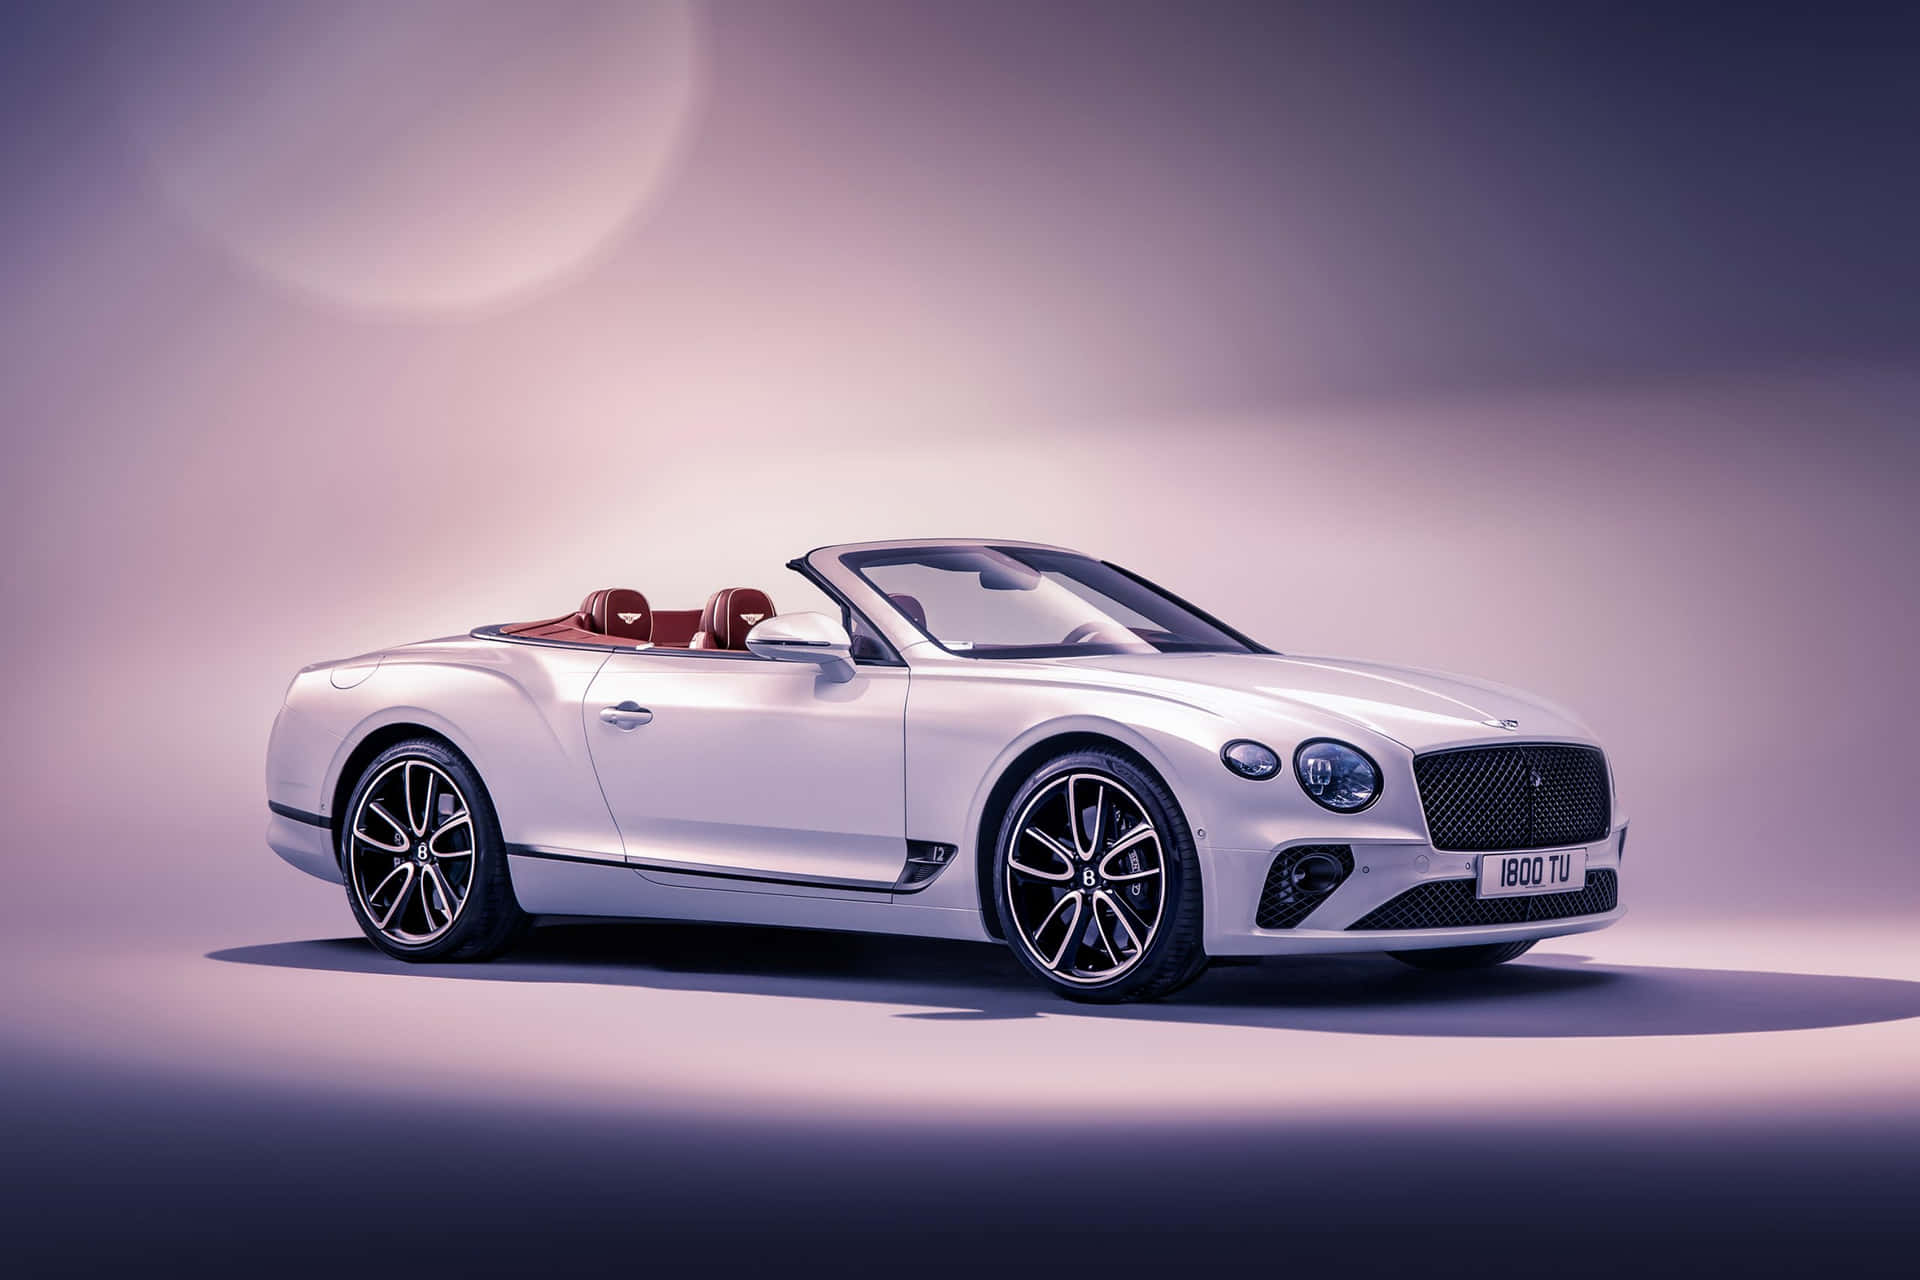 Dynamic Elegance - The Stunning Bentley Continental GT Wallpaper